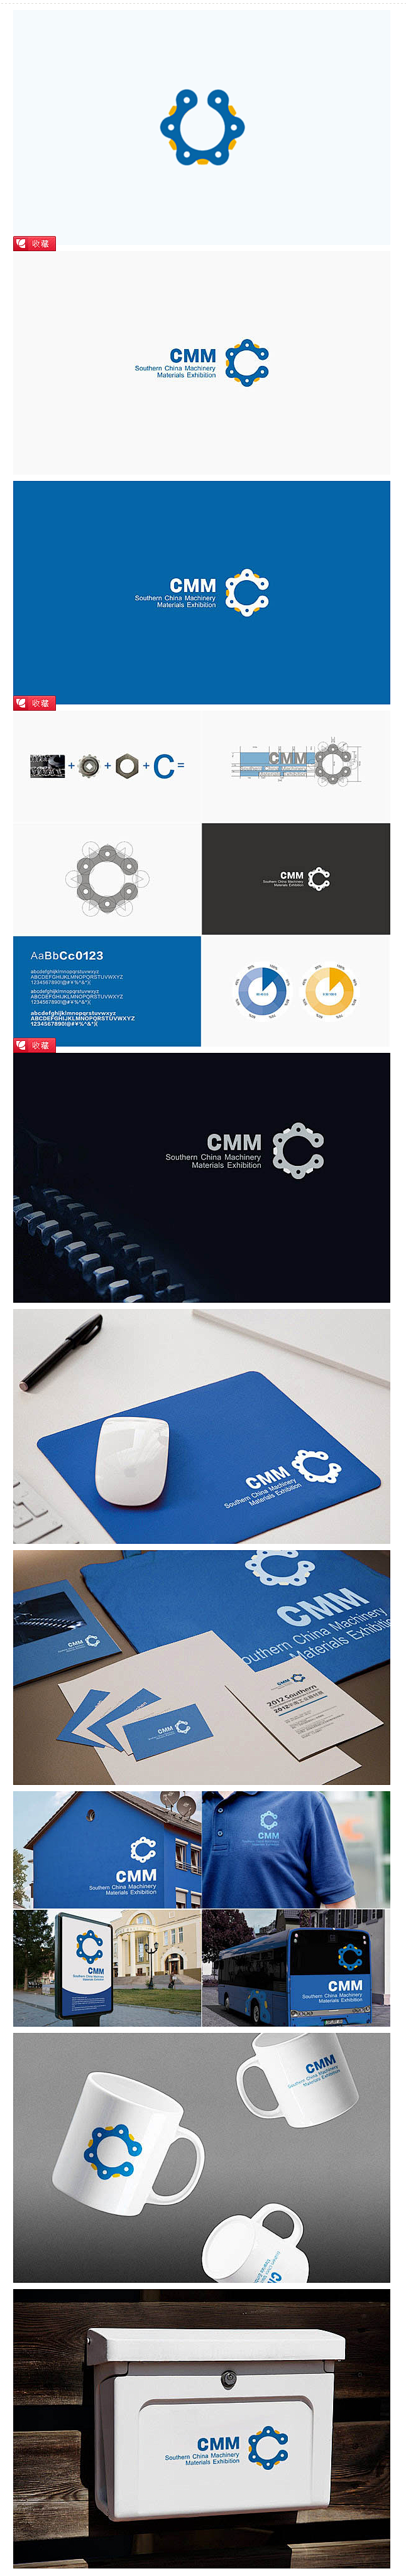 cmm工业器械展览品牌形象设计_创意元素...